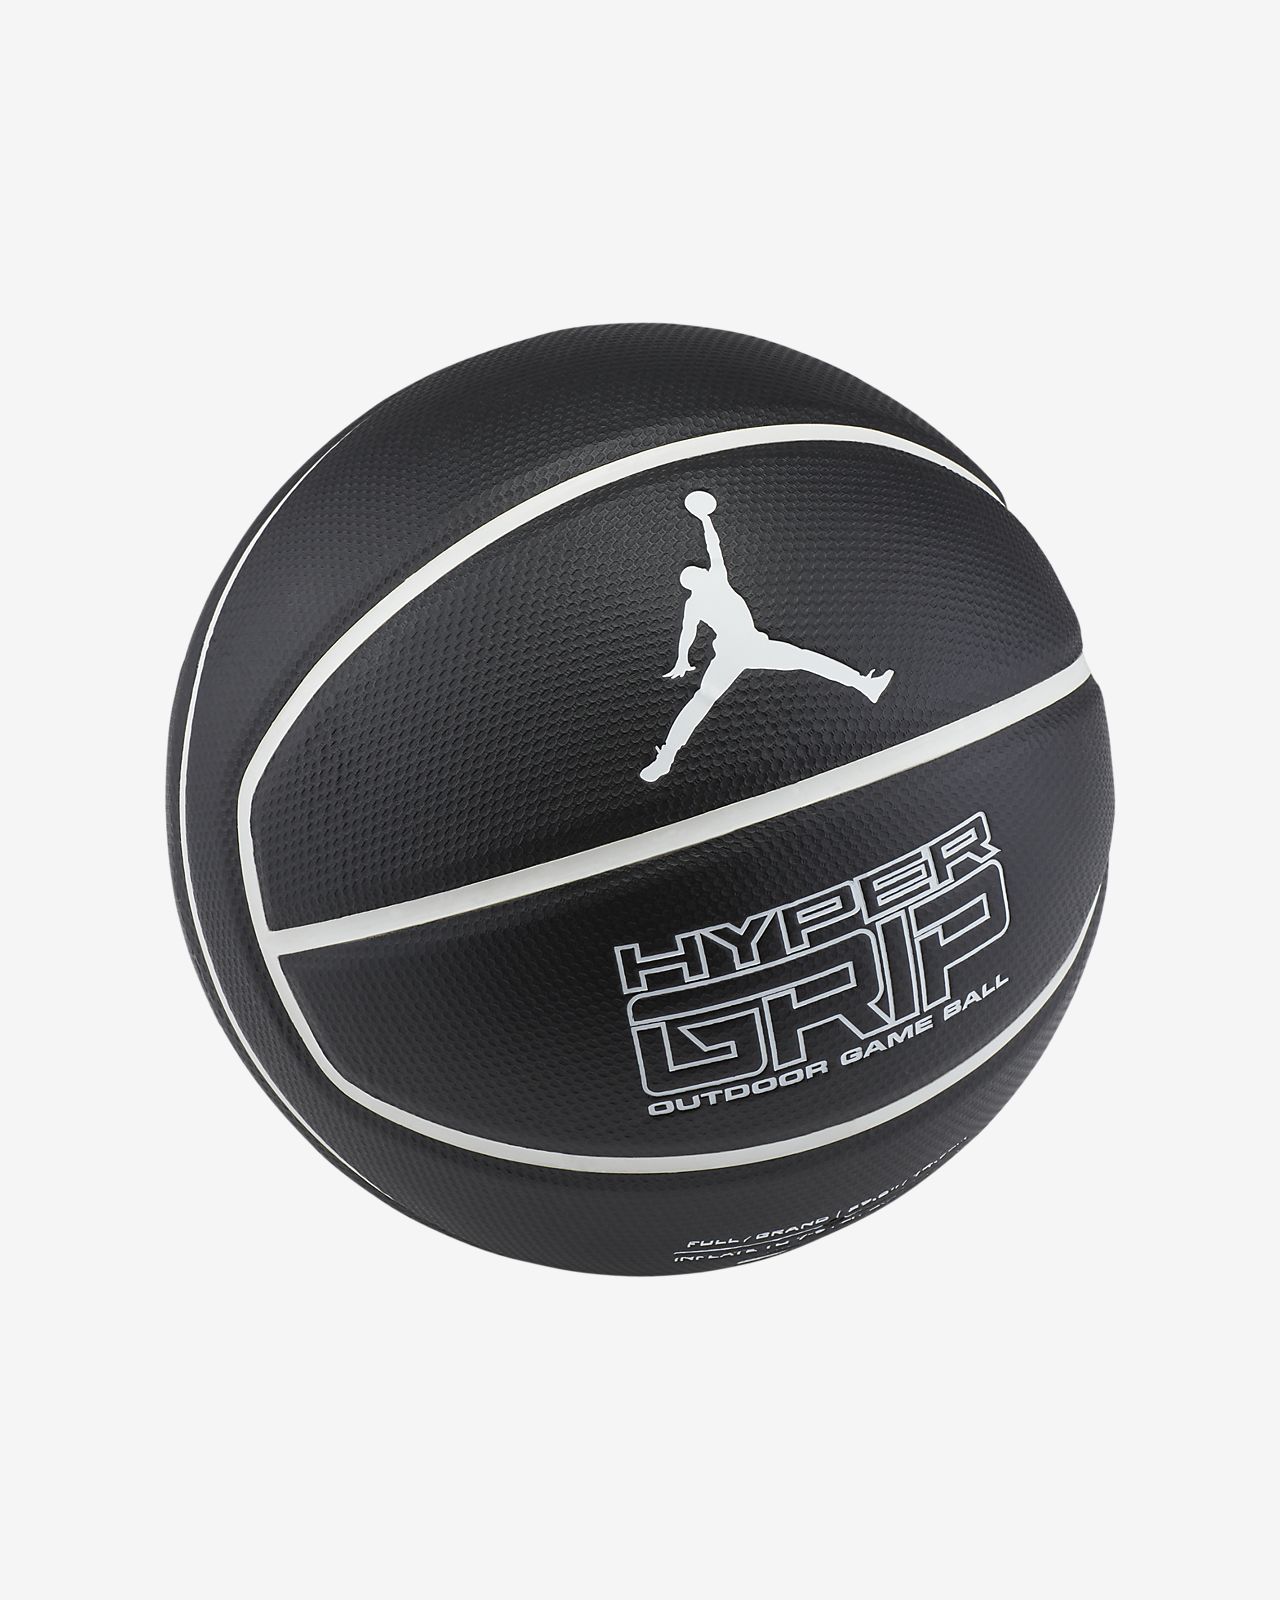 Jordan HyperGrip 4P Basketball